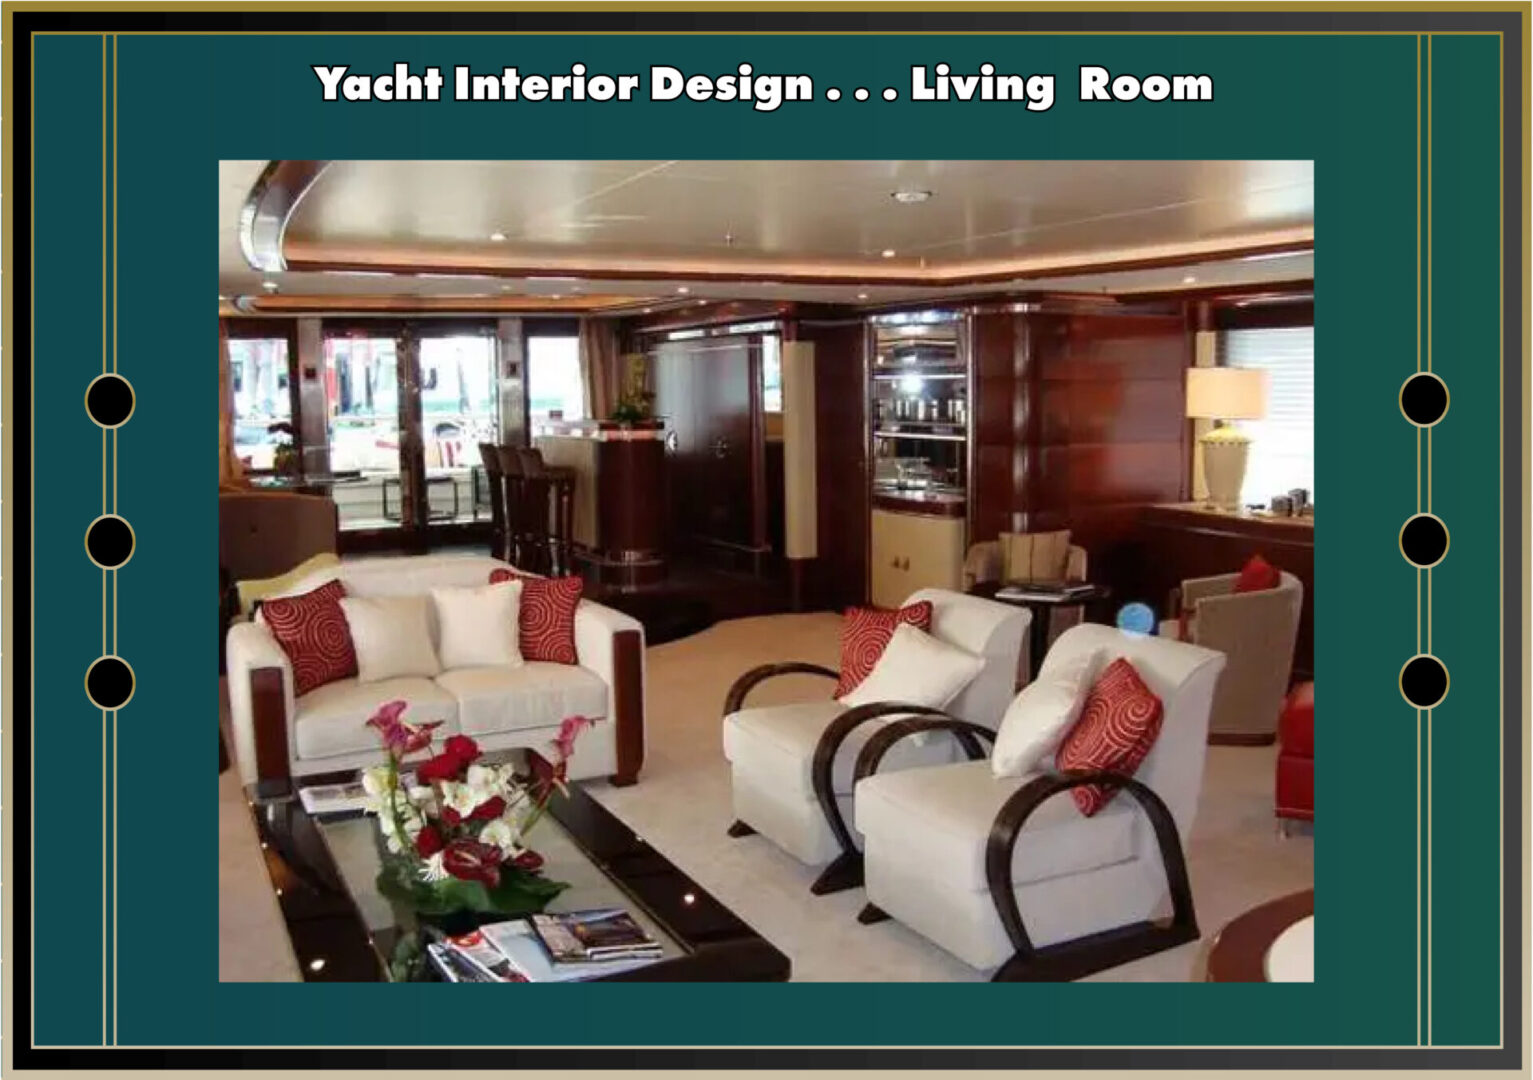 Yacht Interior Design Living Room